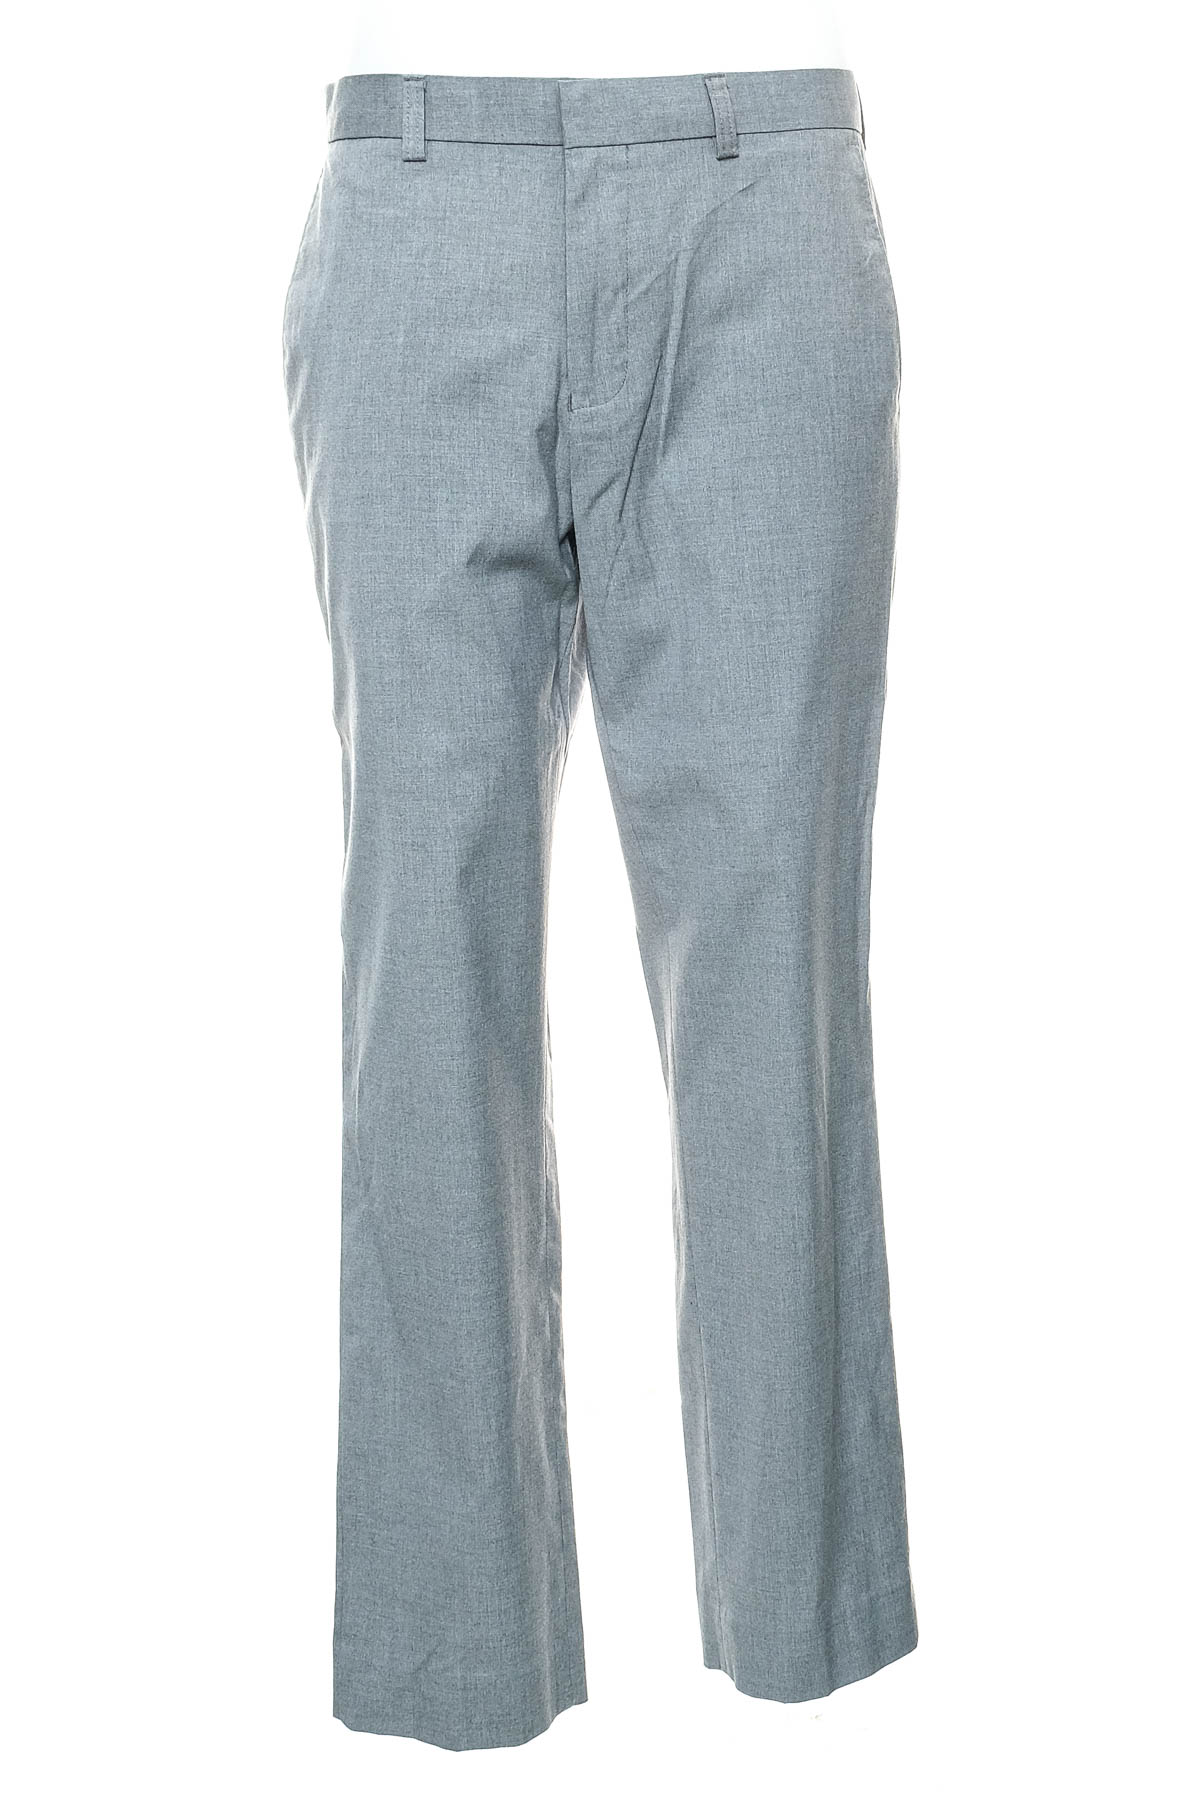 Men's trousers - BURTON - 0